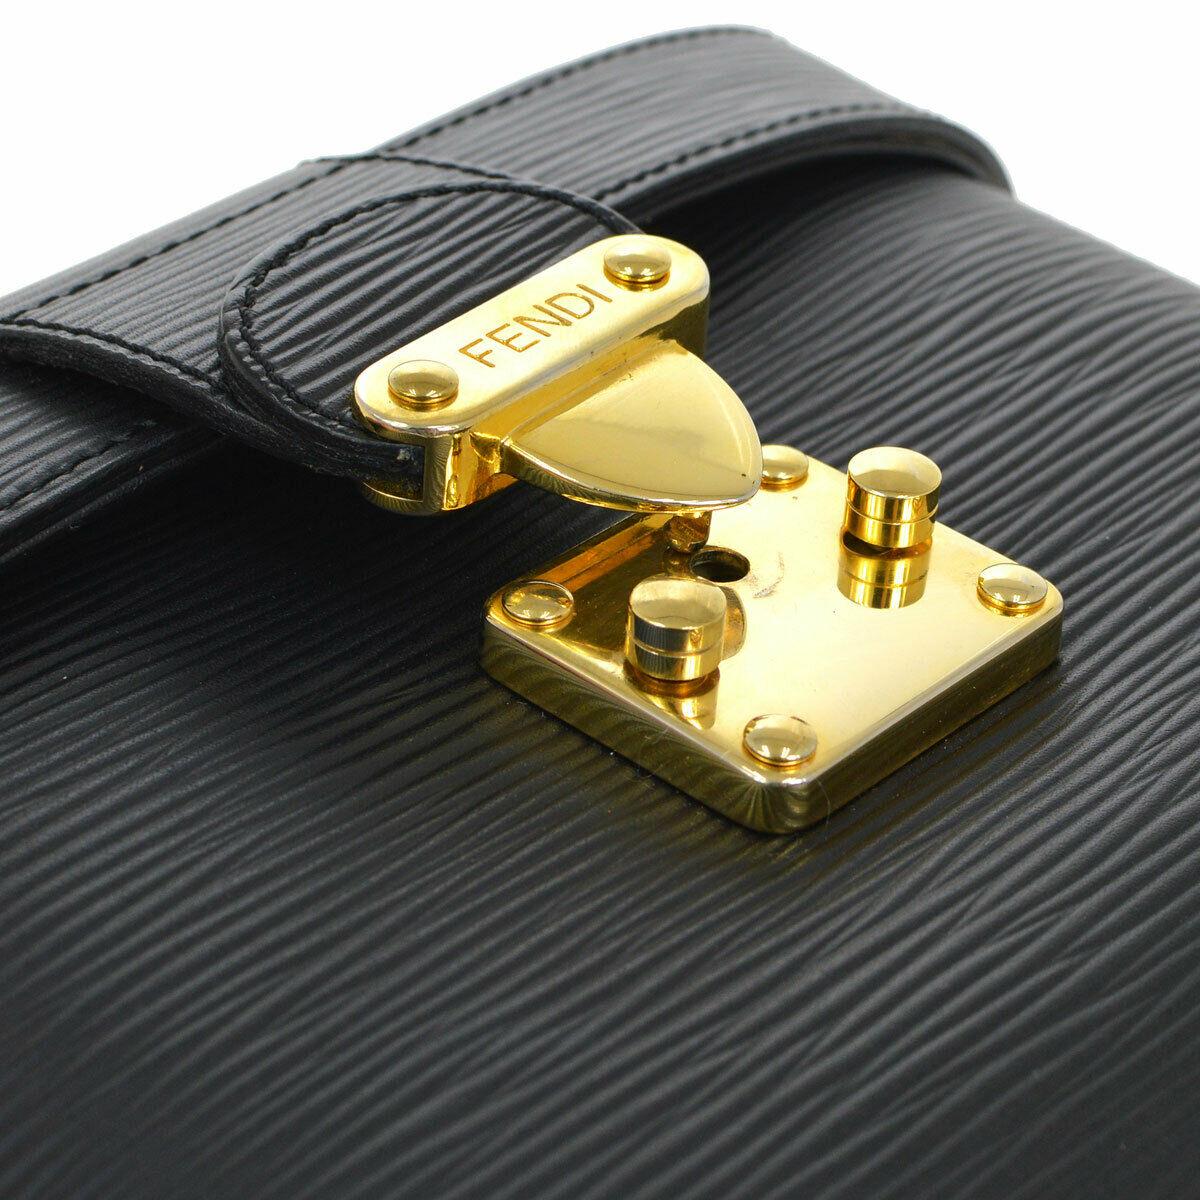 Fendi Black Leather Box Vanity 2 in 1 Evening Top Handle Satchel Shoulder Bag

Epi leather
Gold tone hardware
Flip lock closure
Woven lining
Handle drop 3.5